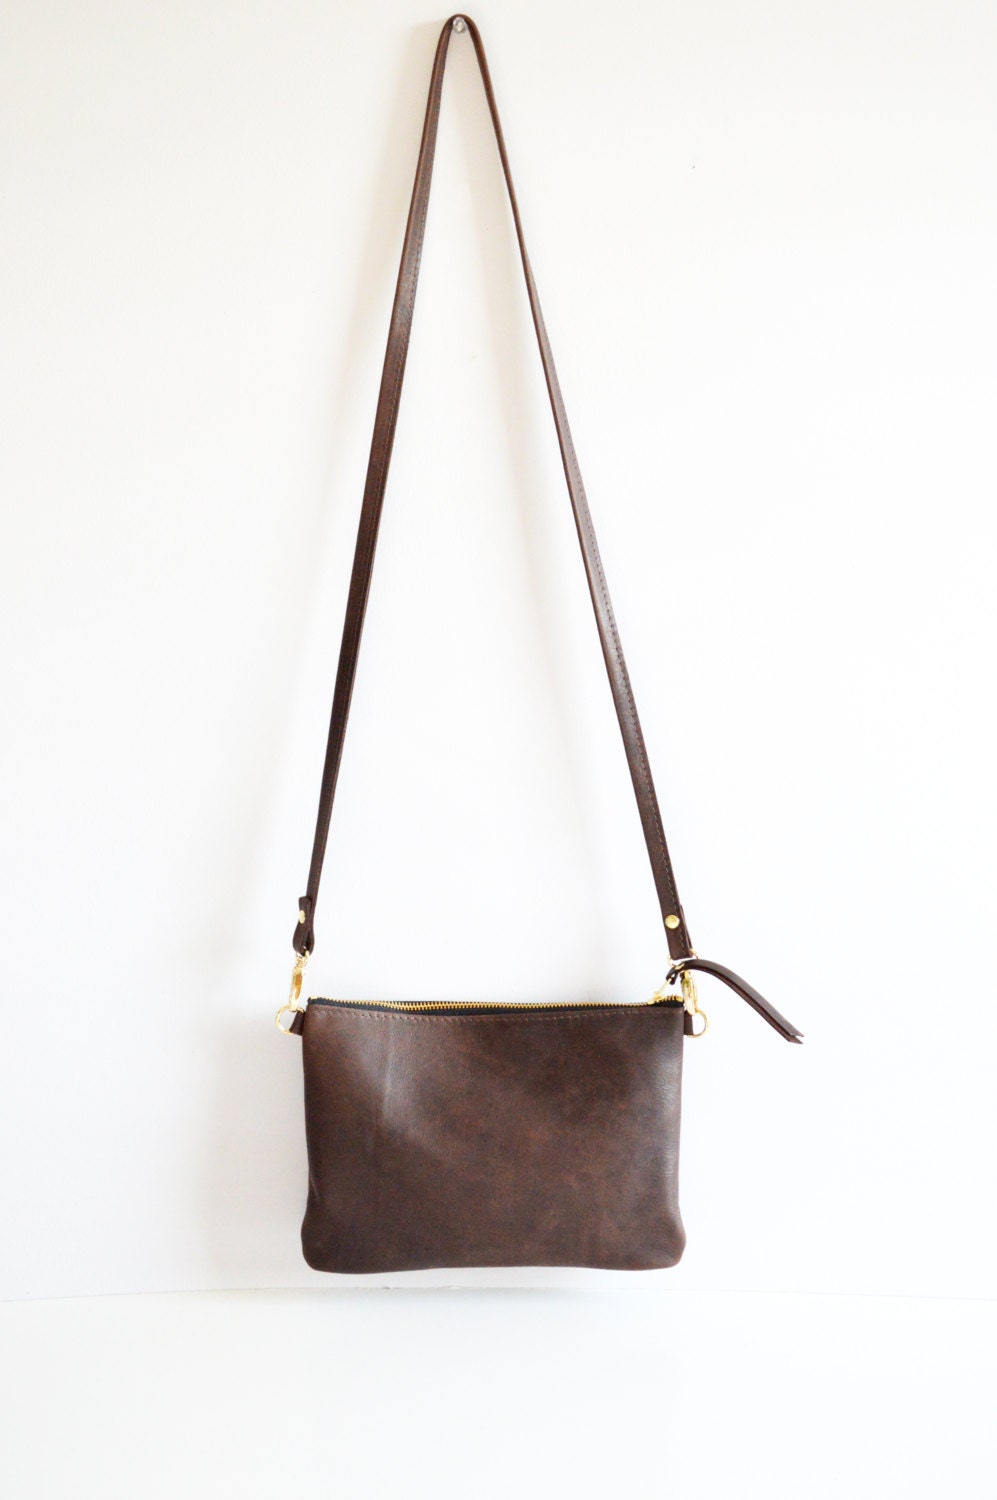 Leather crossbody bag / Minimalist bag / Small leather bag